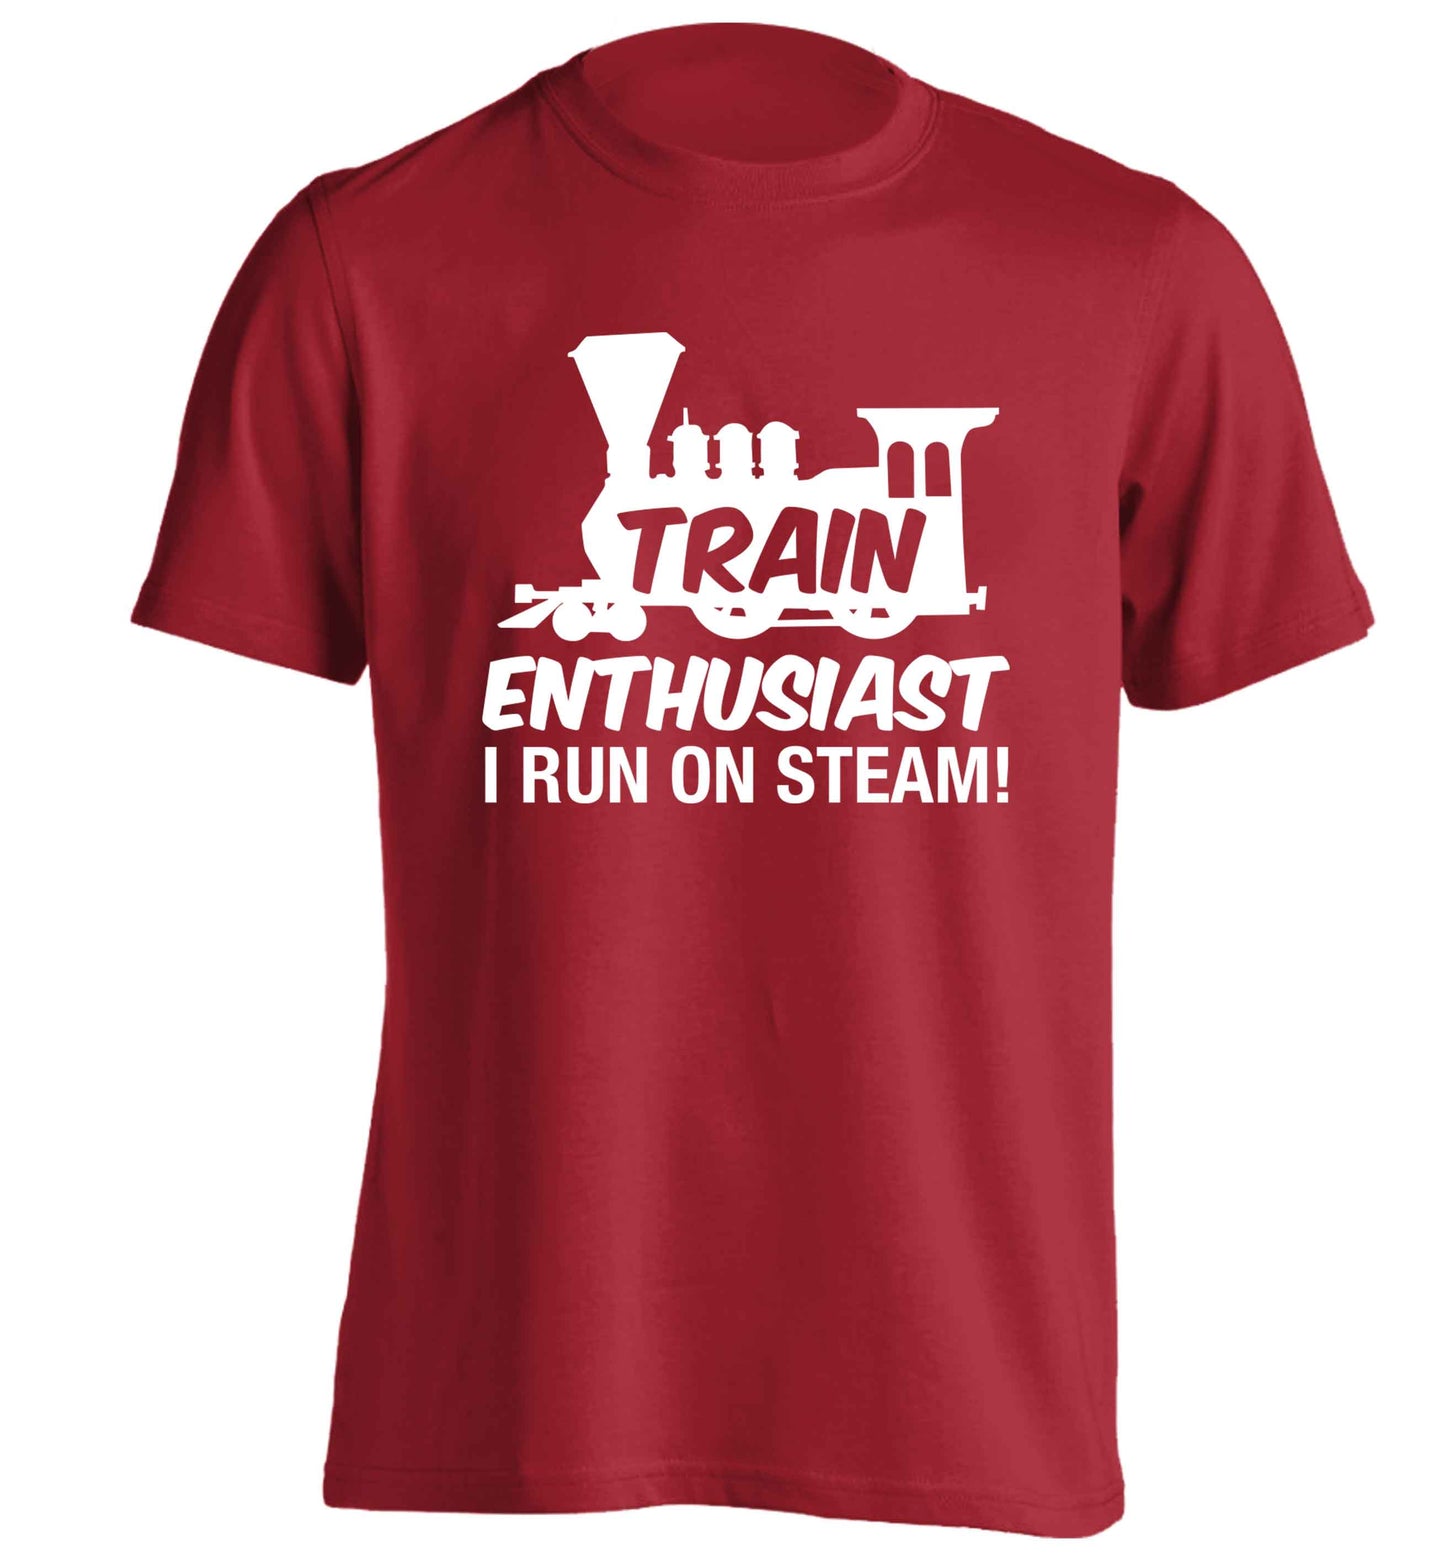 Train enthusiast I run on steam adults unisex red Tshirt 2XL